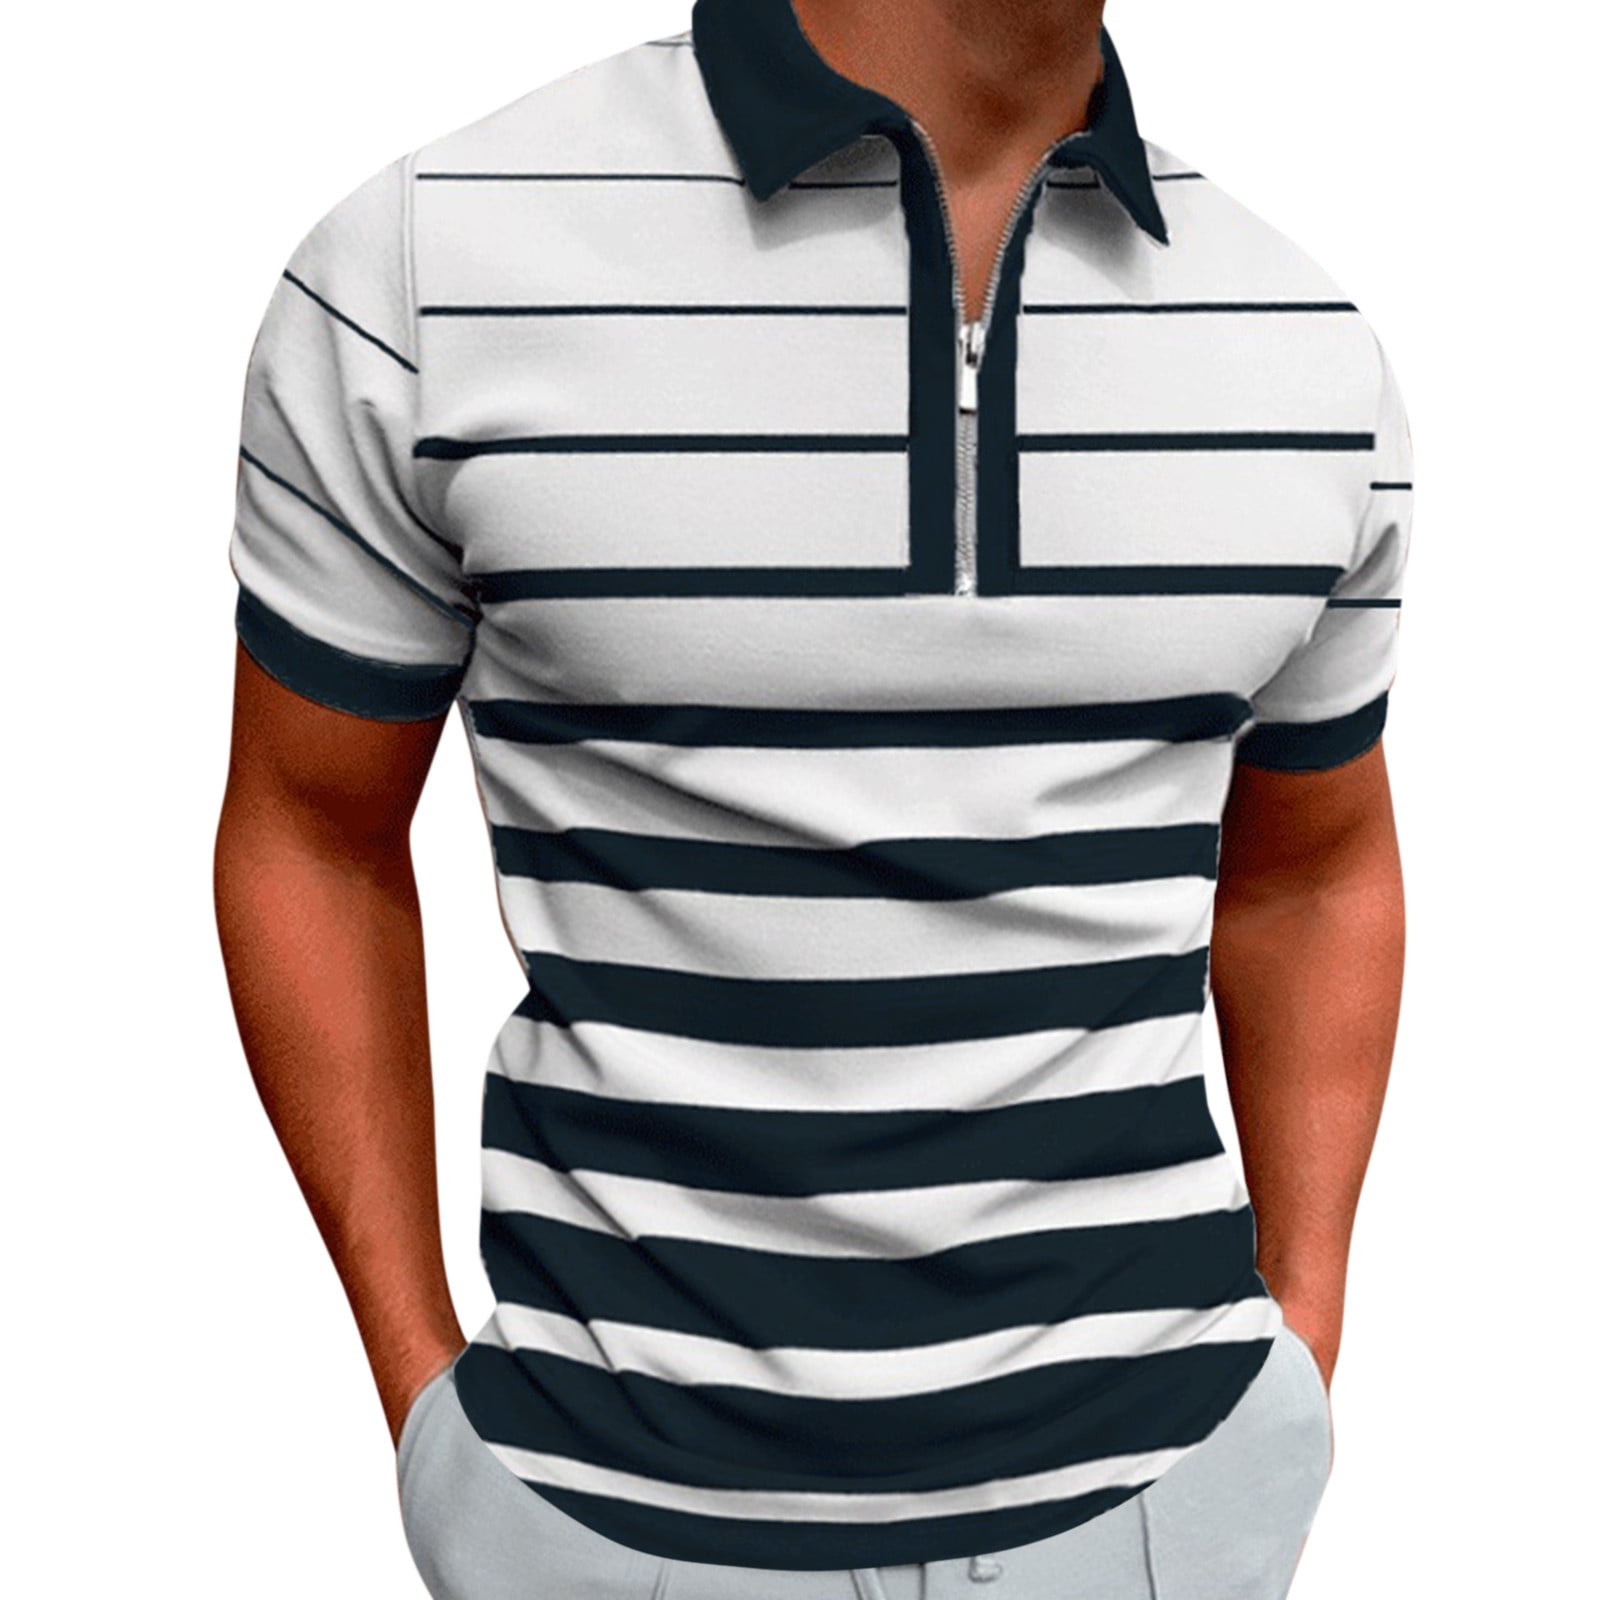 Shakumy Pro 5 T Shirts for Men Men's Casual Tops Shirt Stripe Print ...